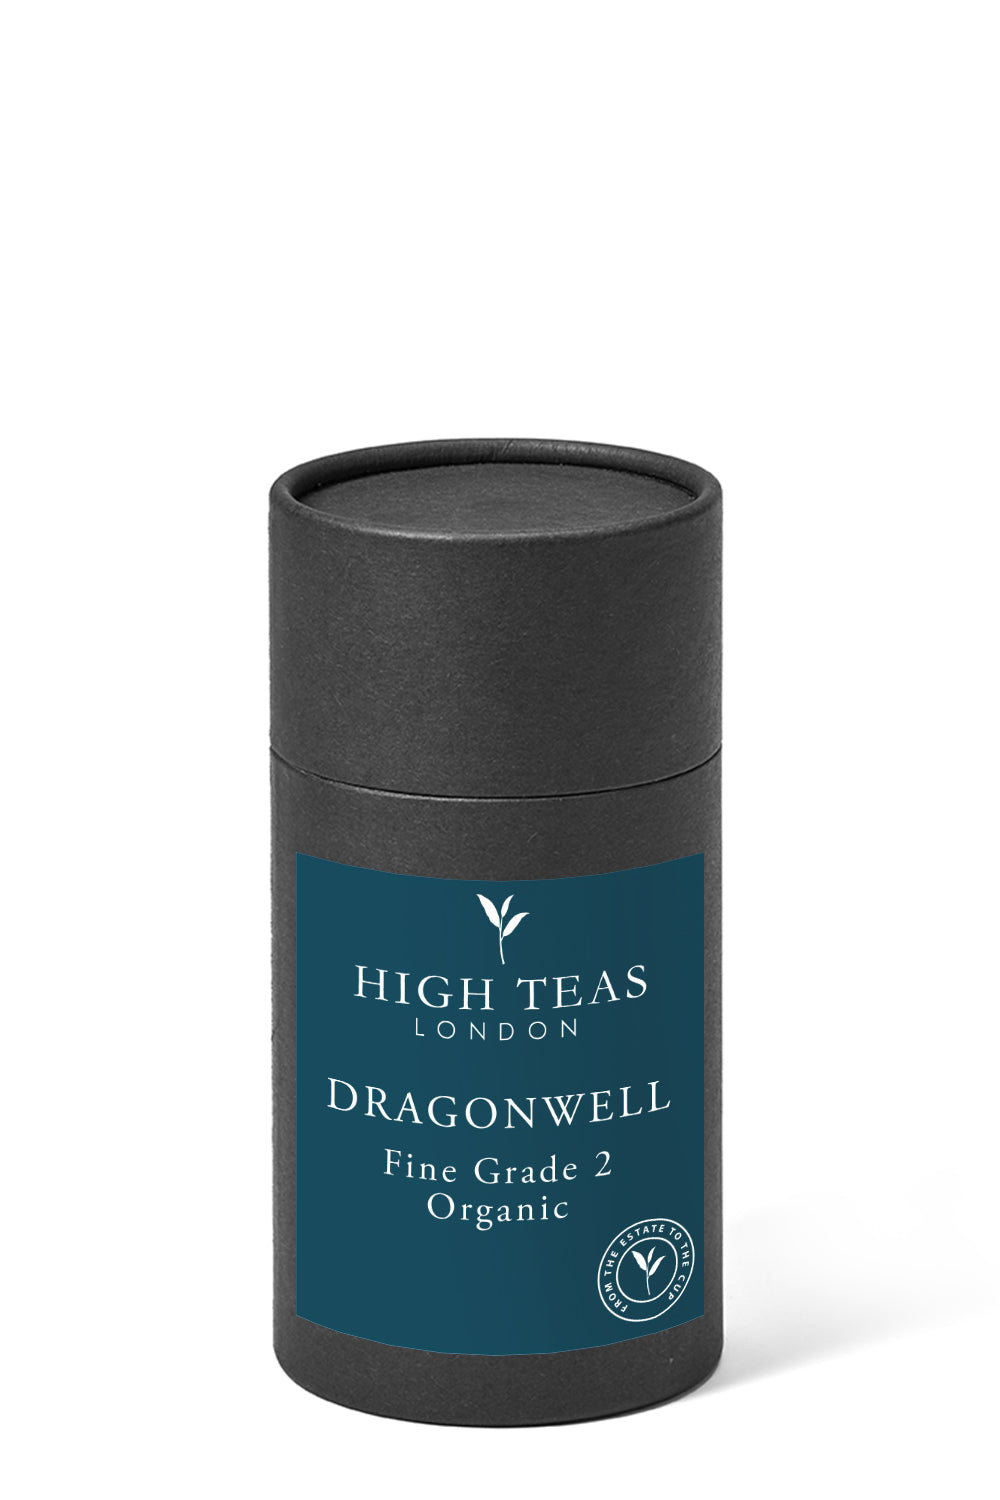 Dragonwell Lung Jing - Fine Grade 2 Organic-60g gift-Loose Leaf Tea-High Teas